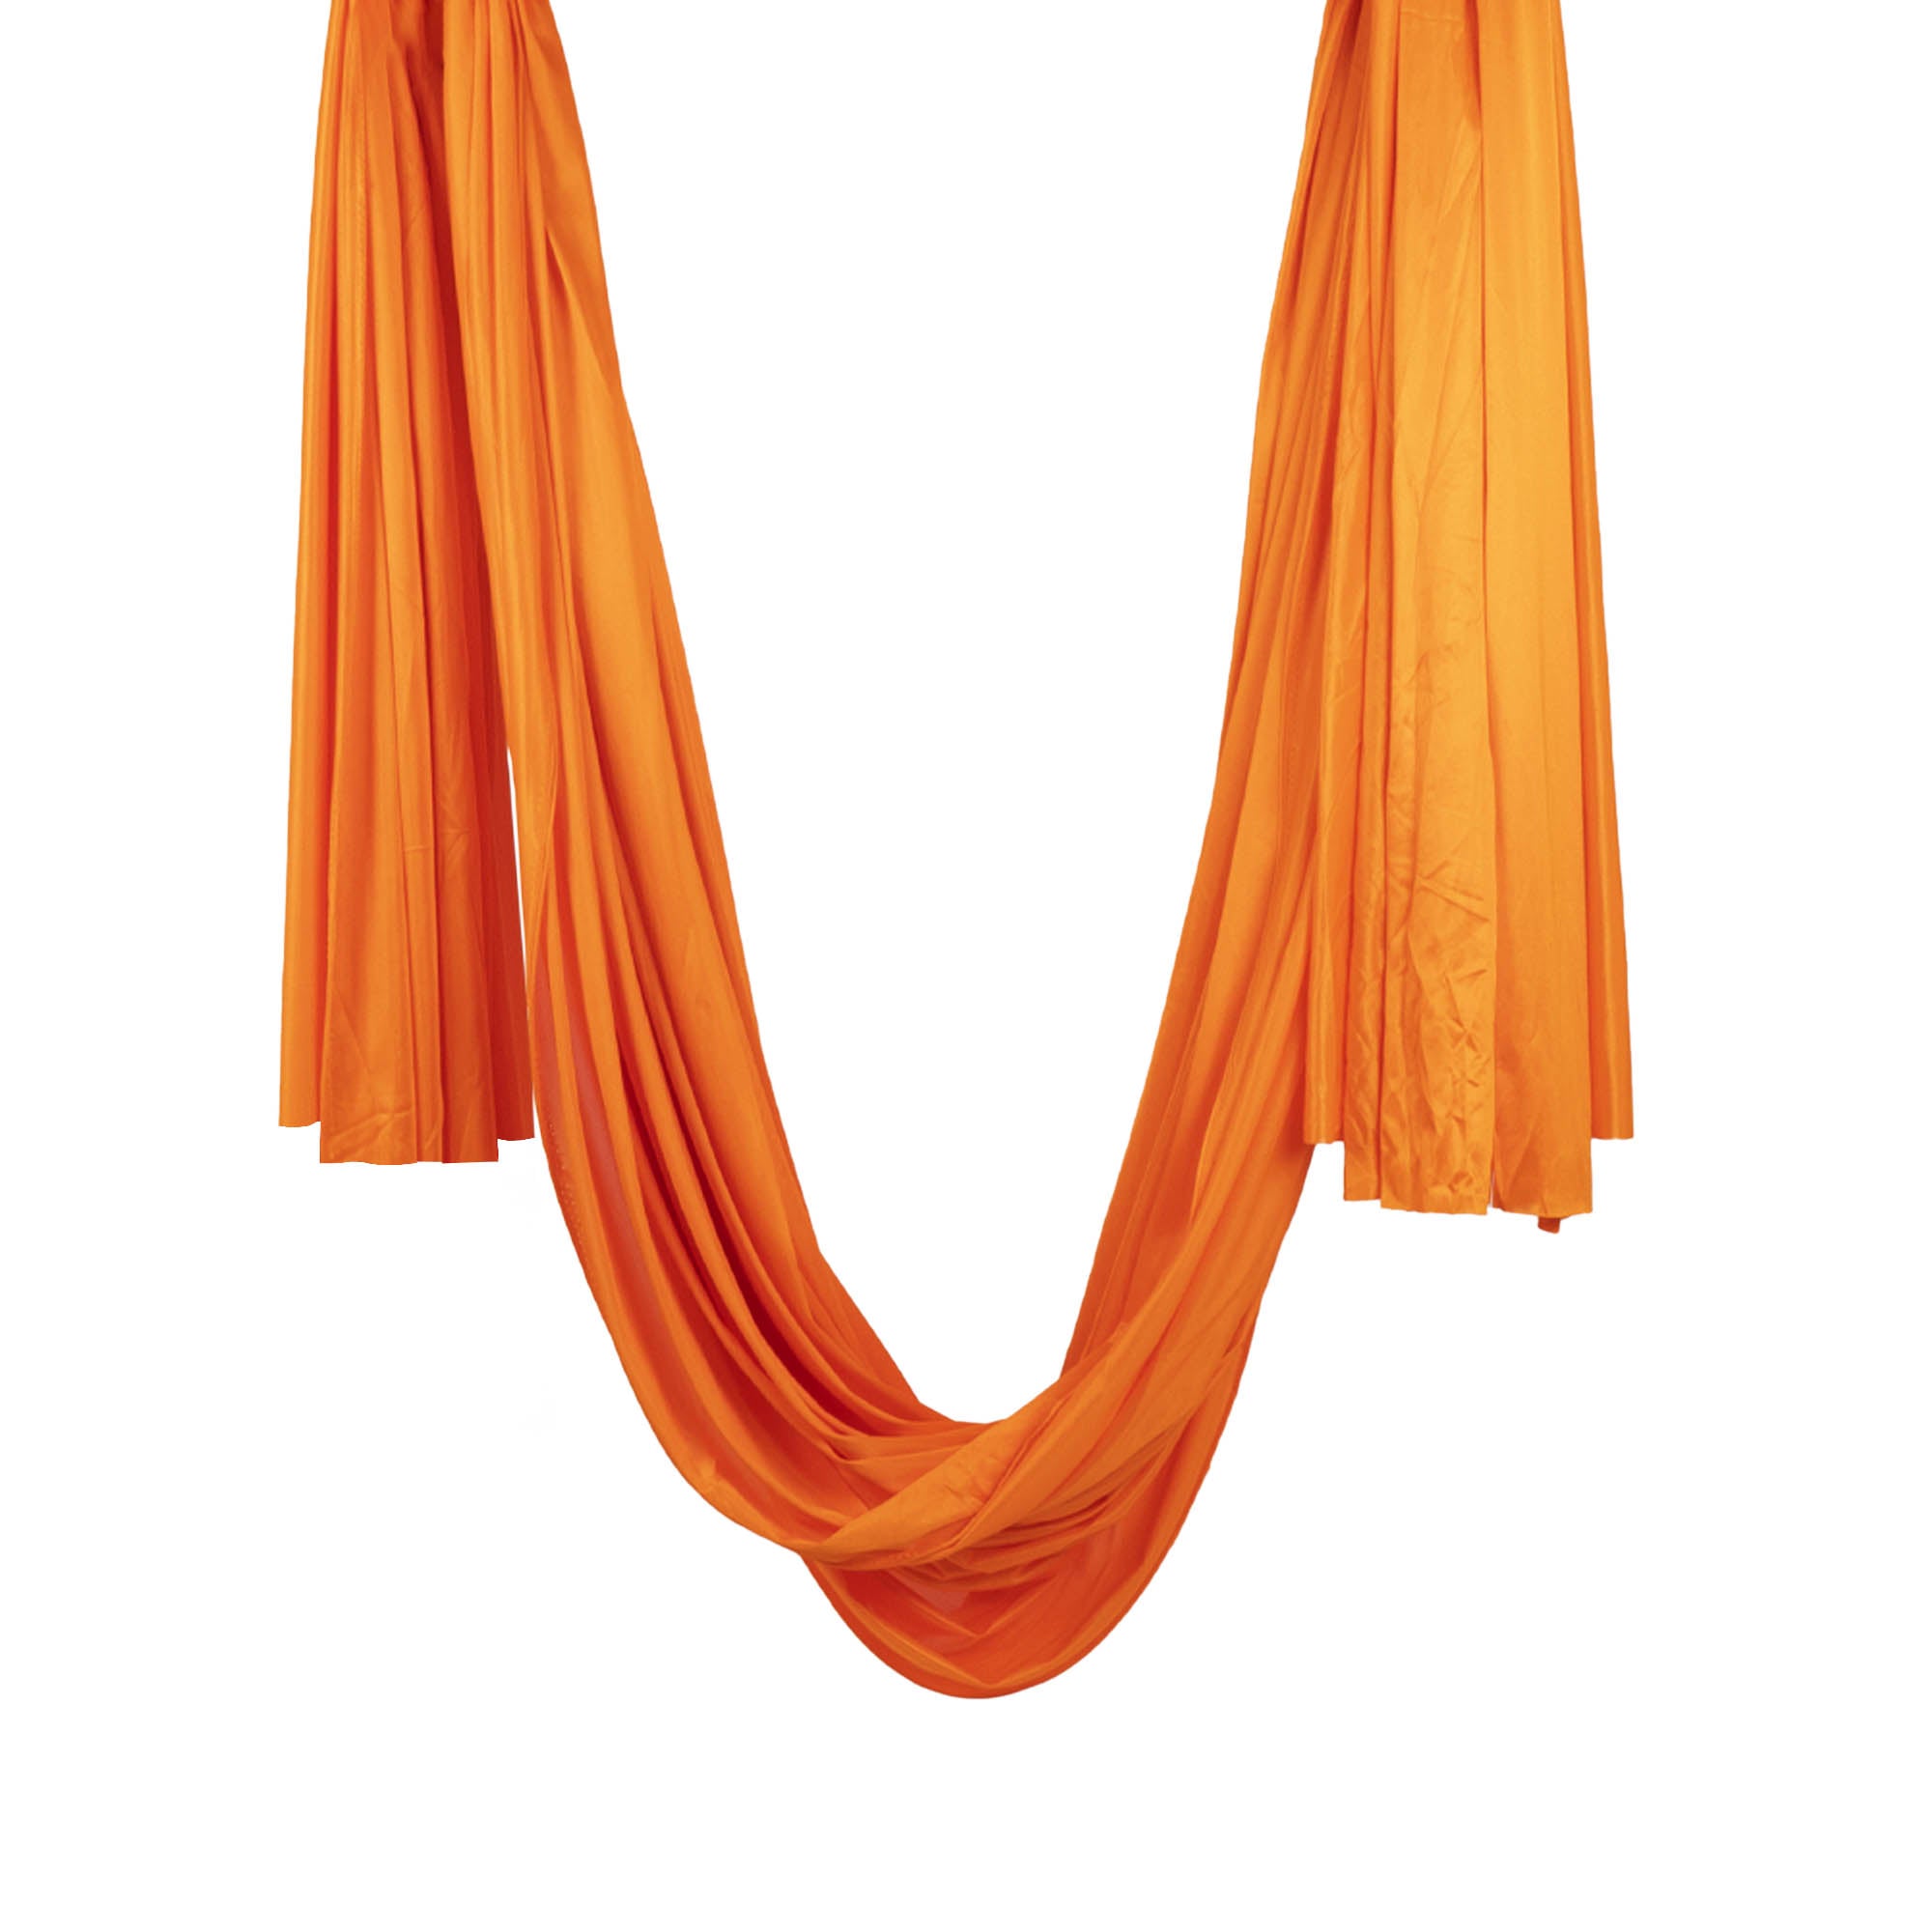 Orange yoga hammock rigged